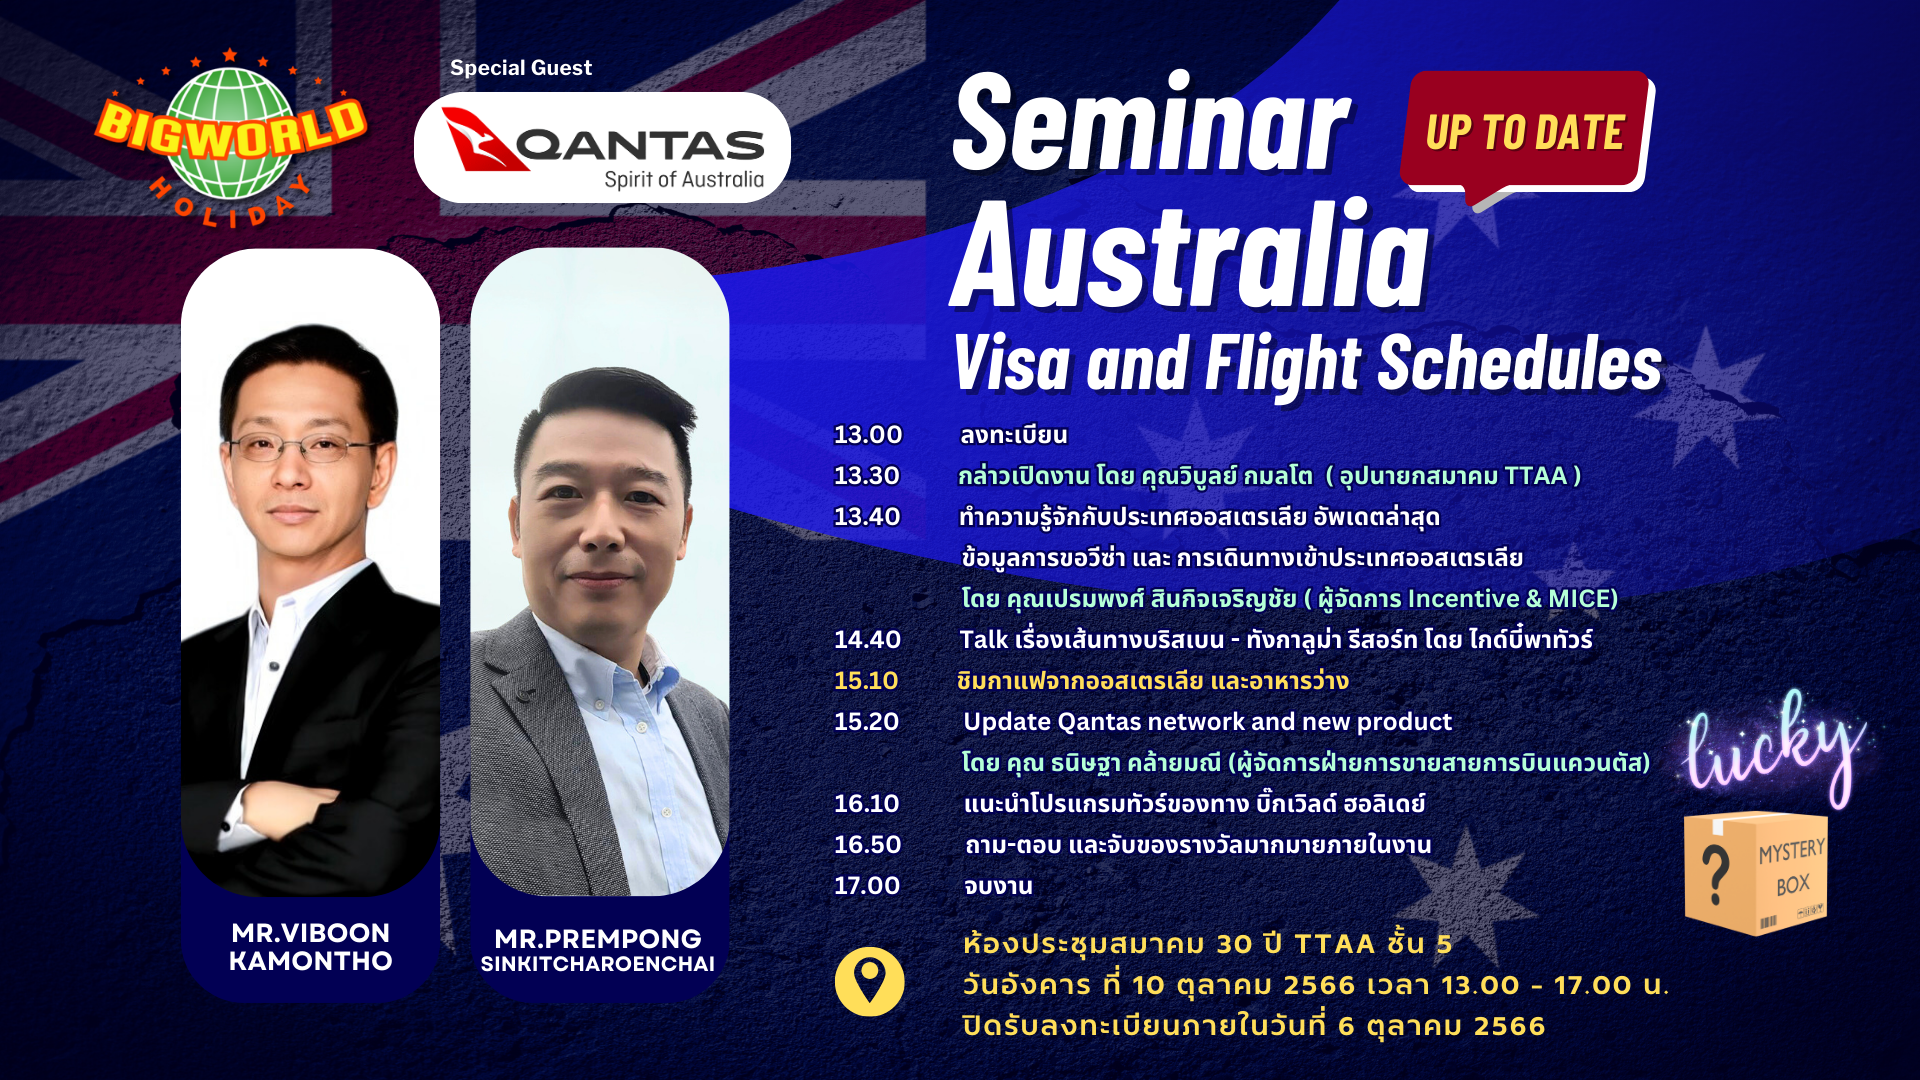 Seminar Update Australia Visa and Flight Schedules